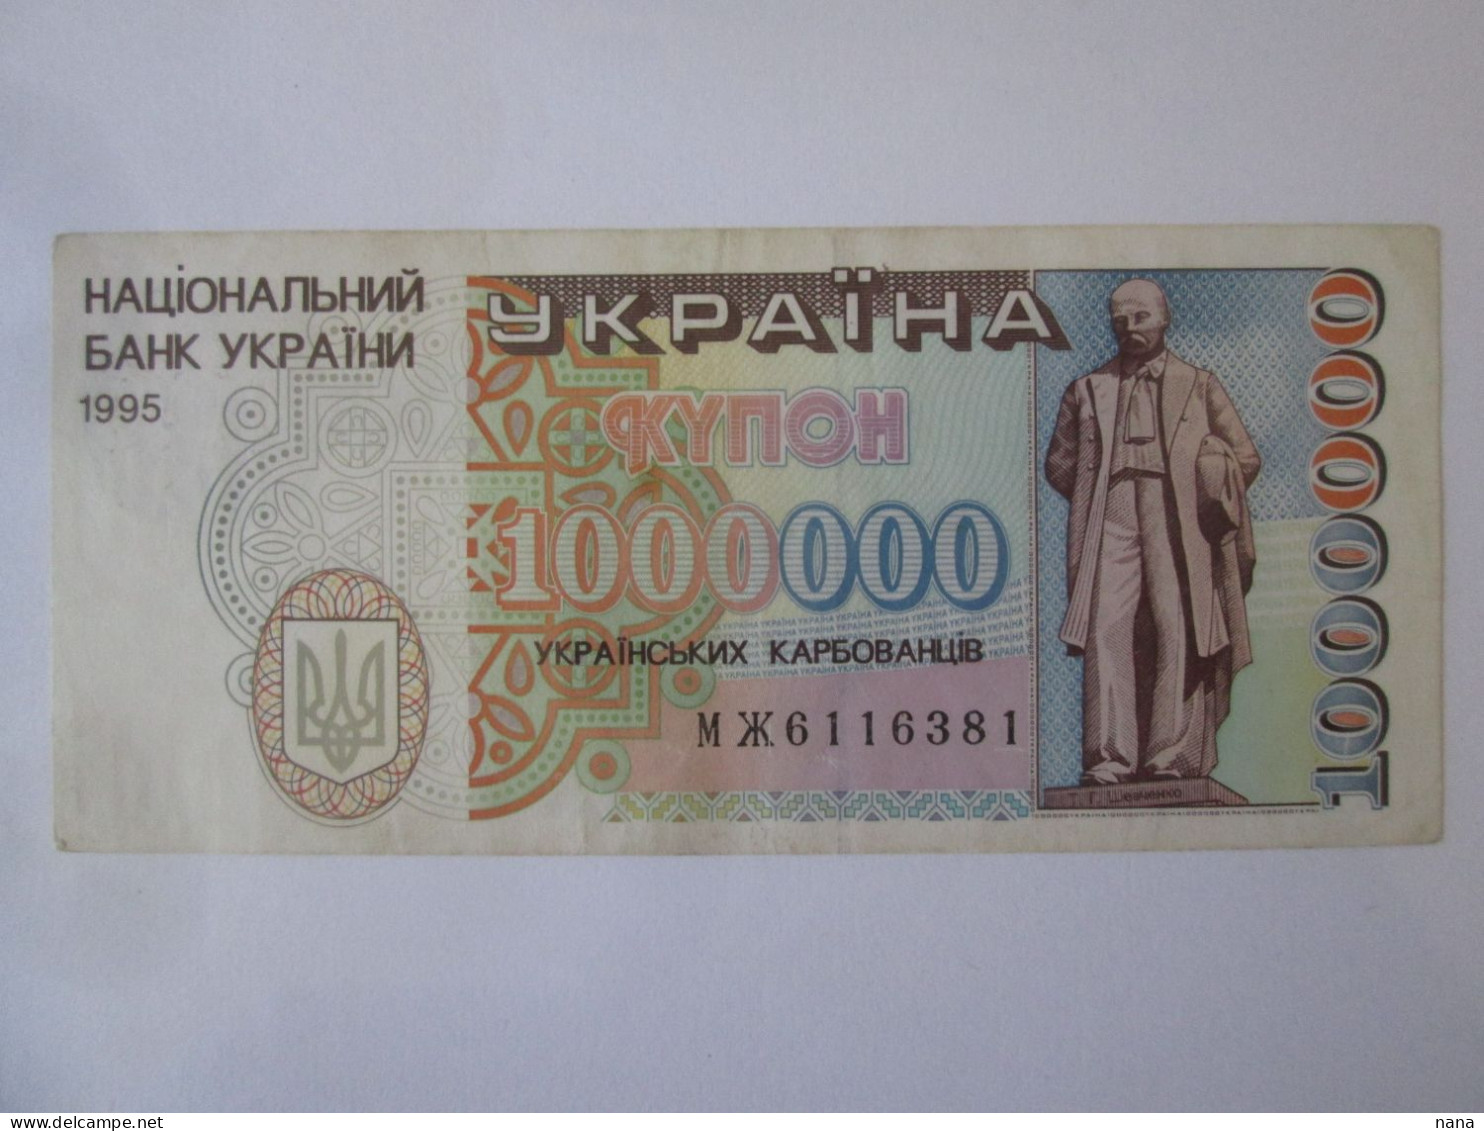 Rare! Ukraine 1000000(1 Million) Karbovantsiv 1995 Banknote Very Good Condition See Pictures - Ukraine